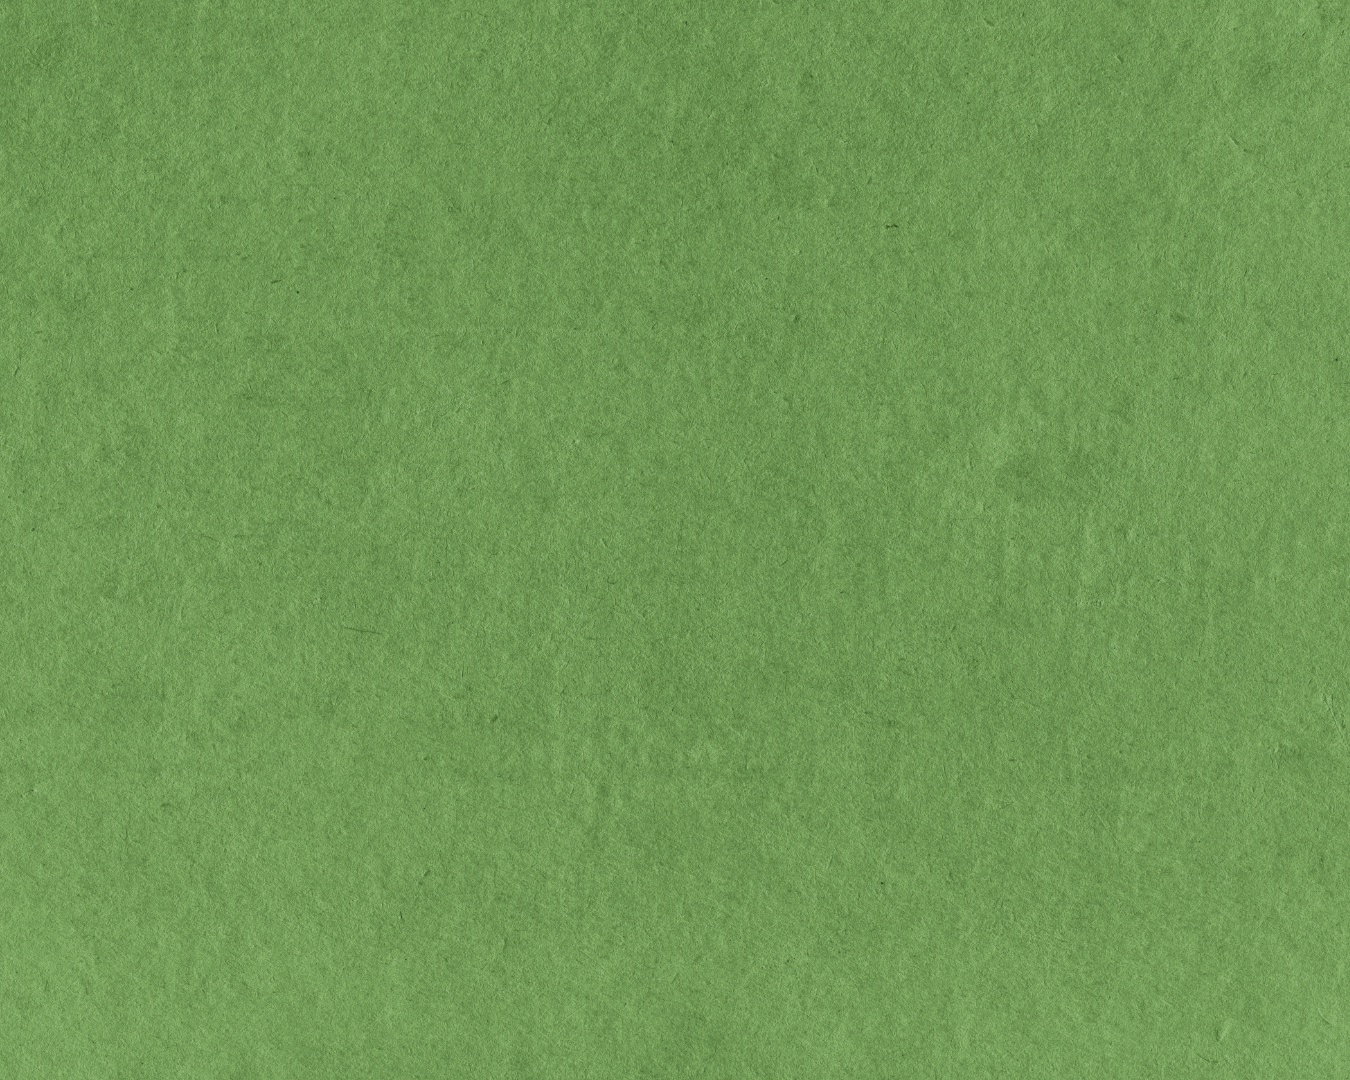 Green textured paper